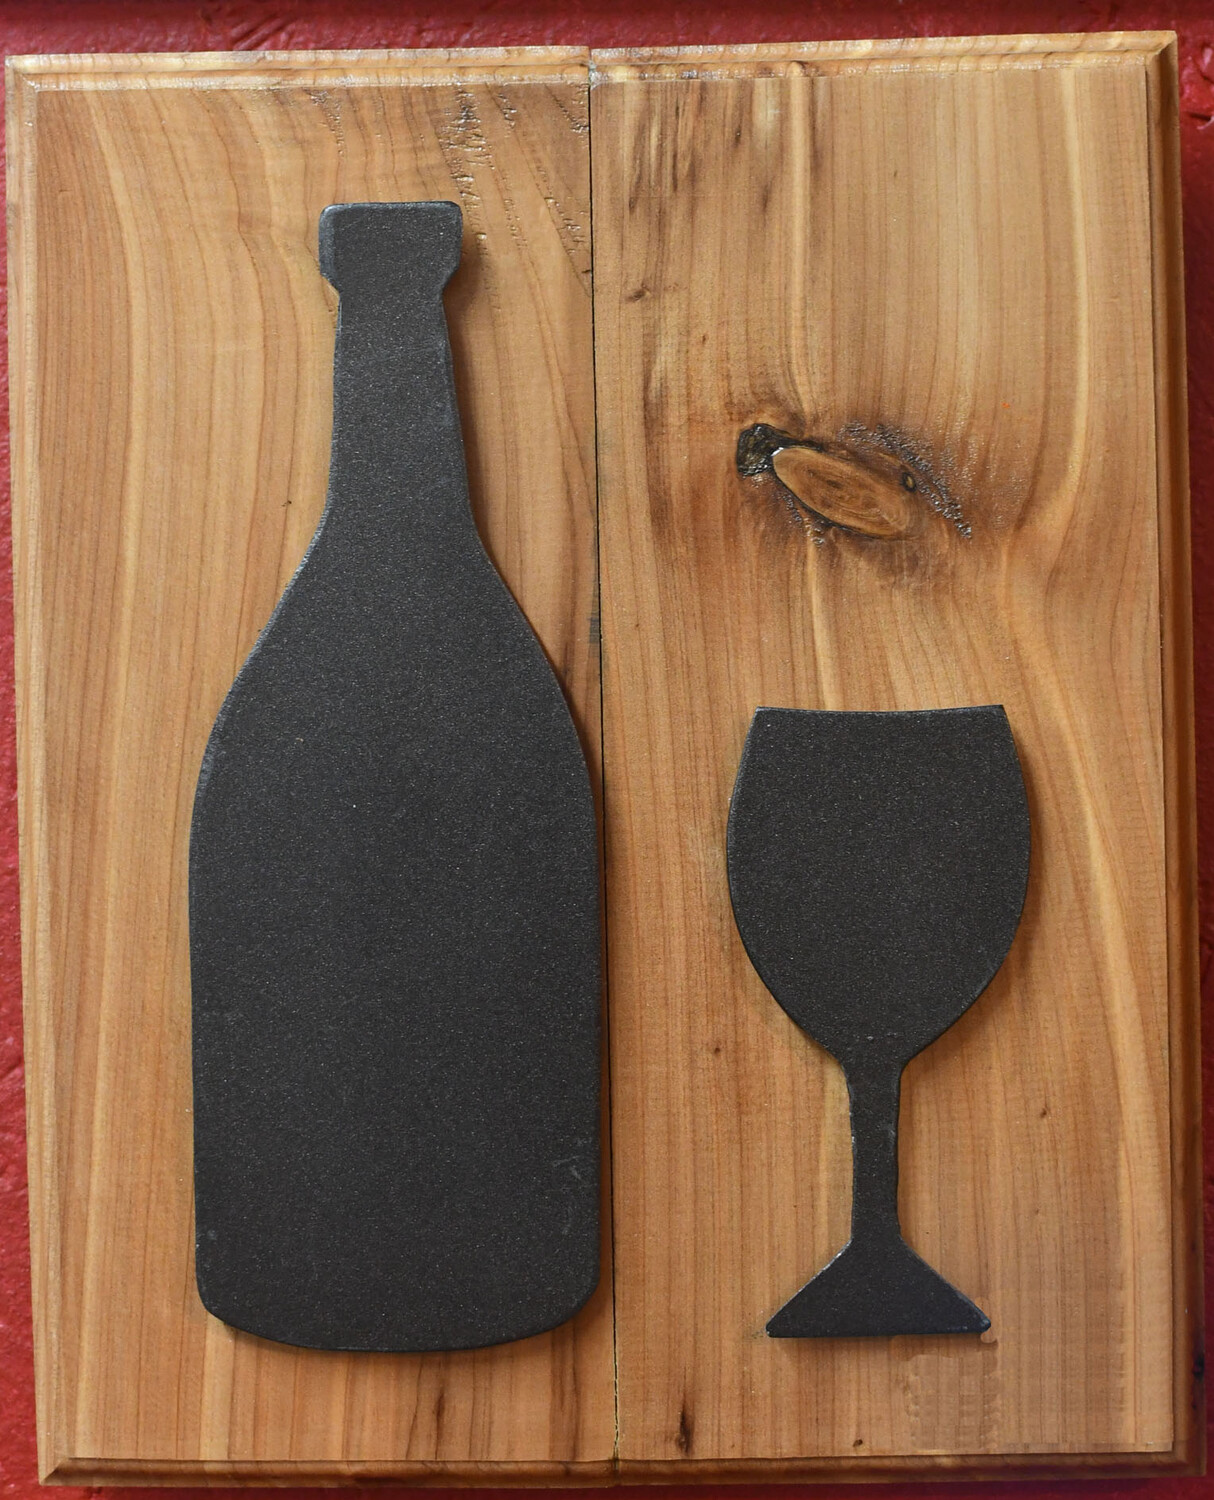 Bottle & wine glass sign